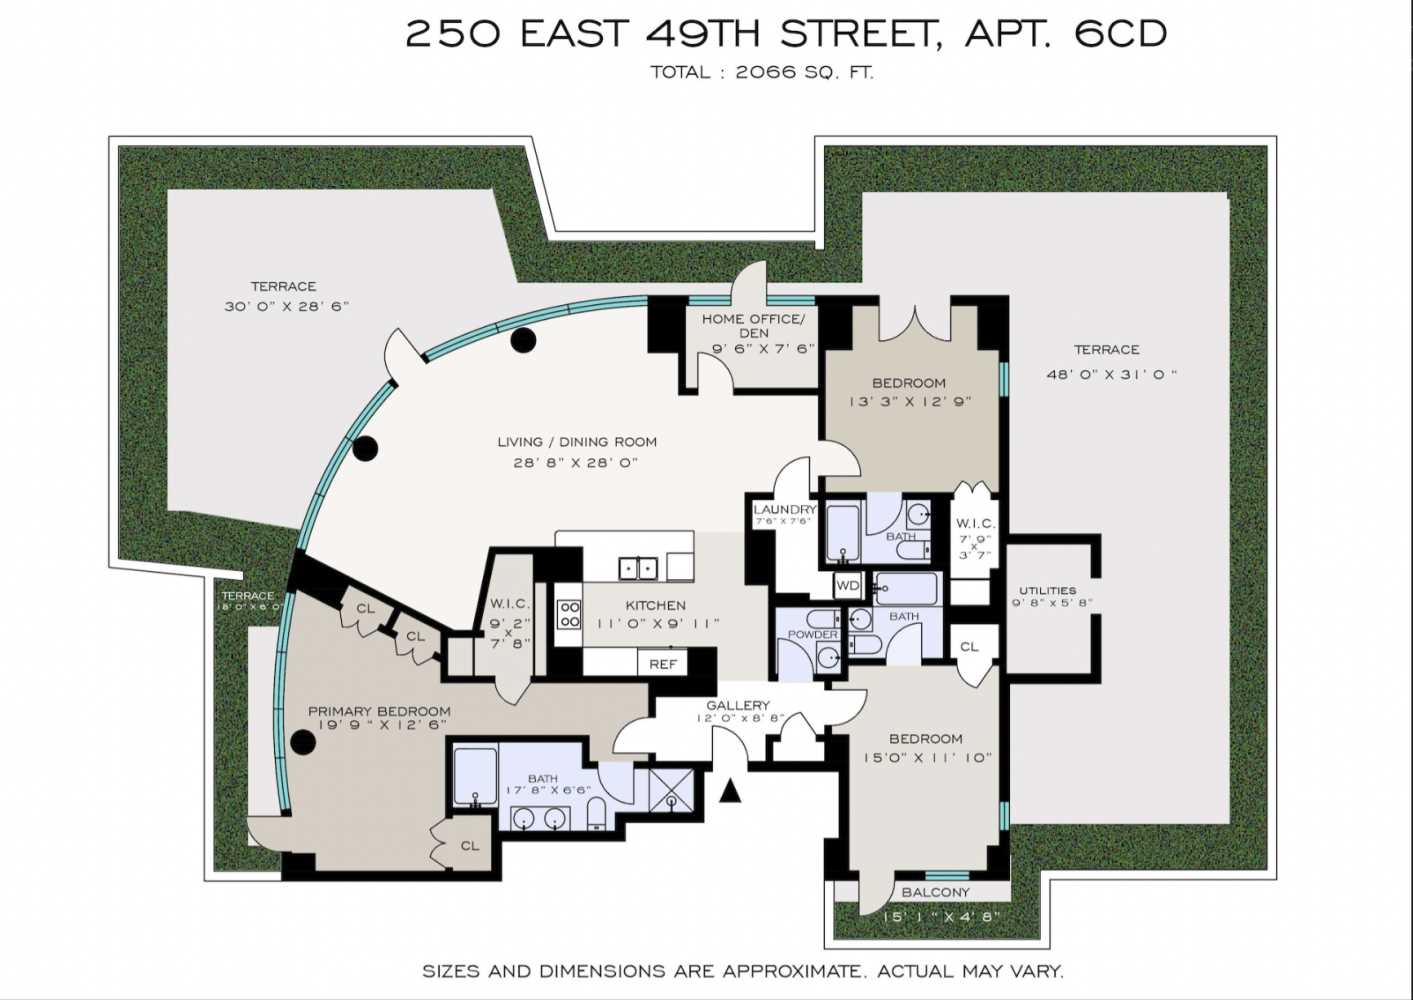 Floorplan for 250 East 49th Street, 6CD